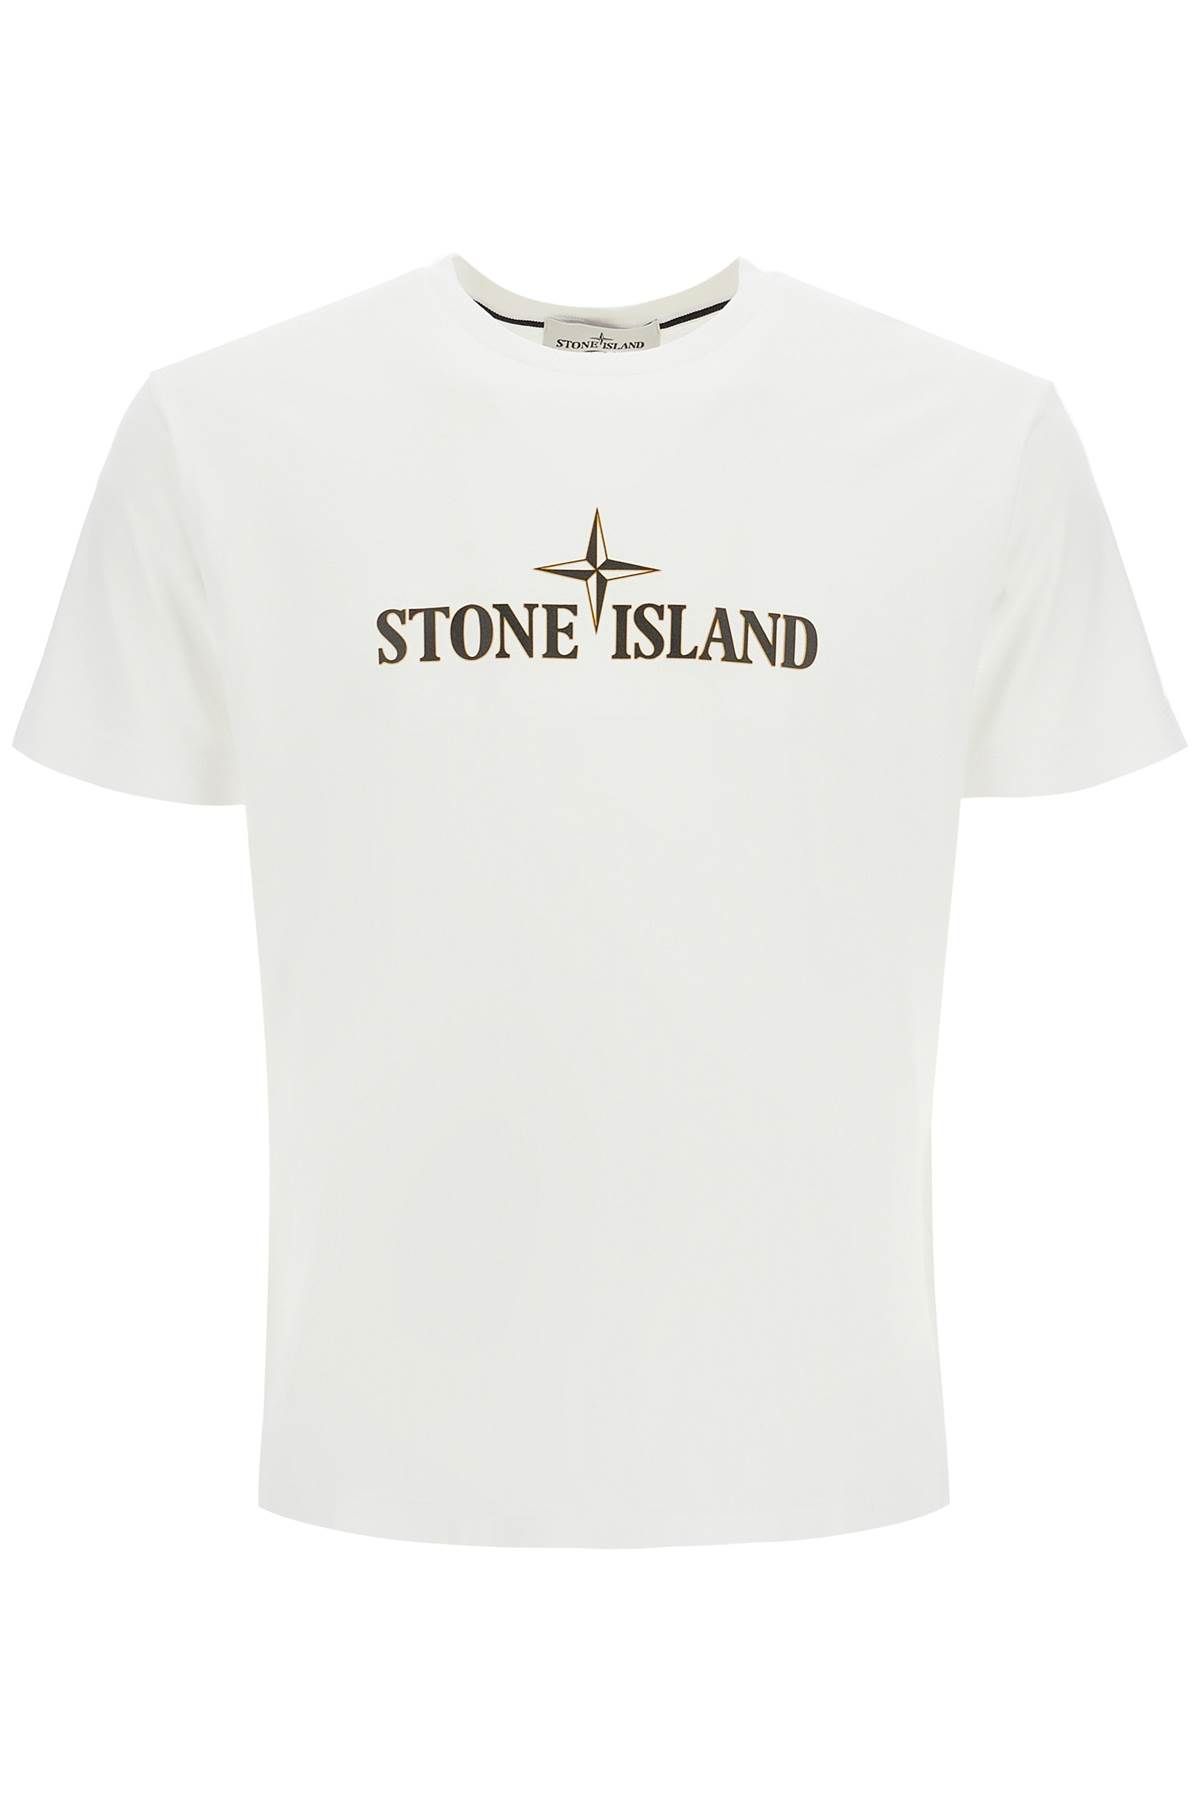 Stone Island STONE ISLAND regular fit logo t-shirt